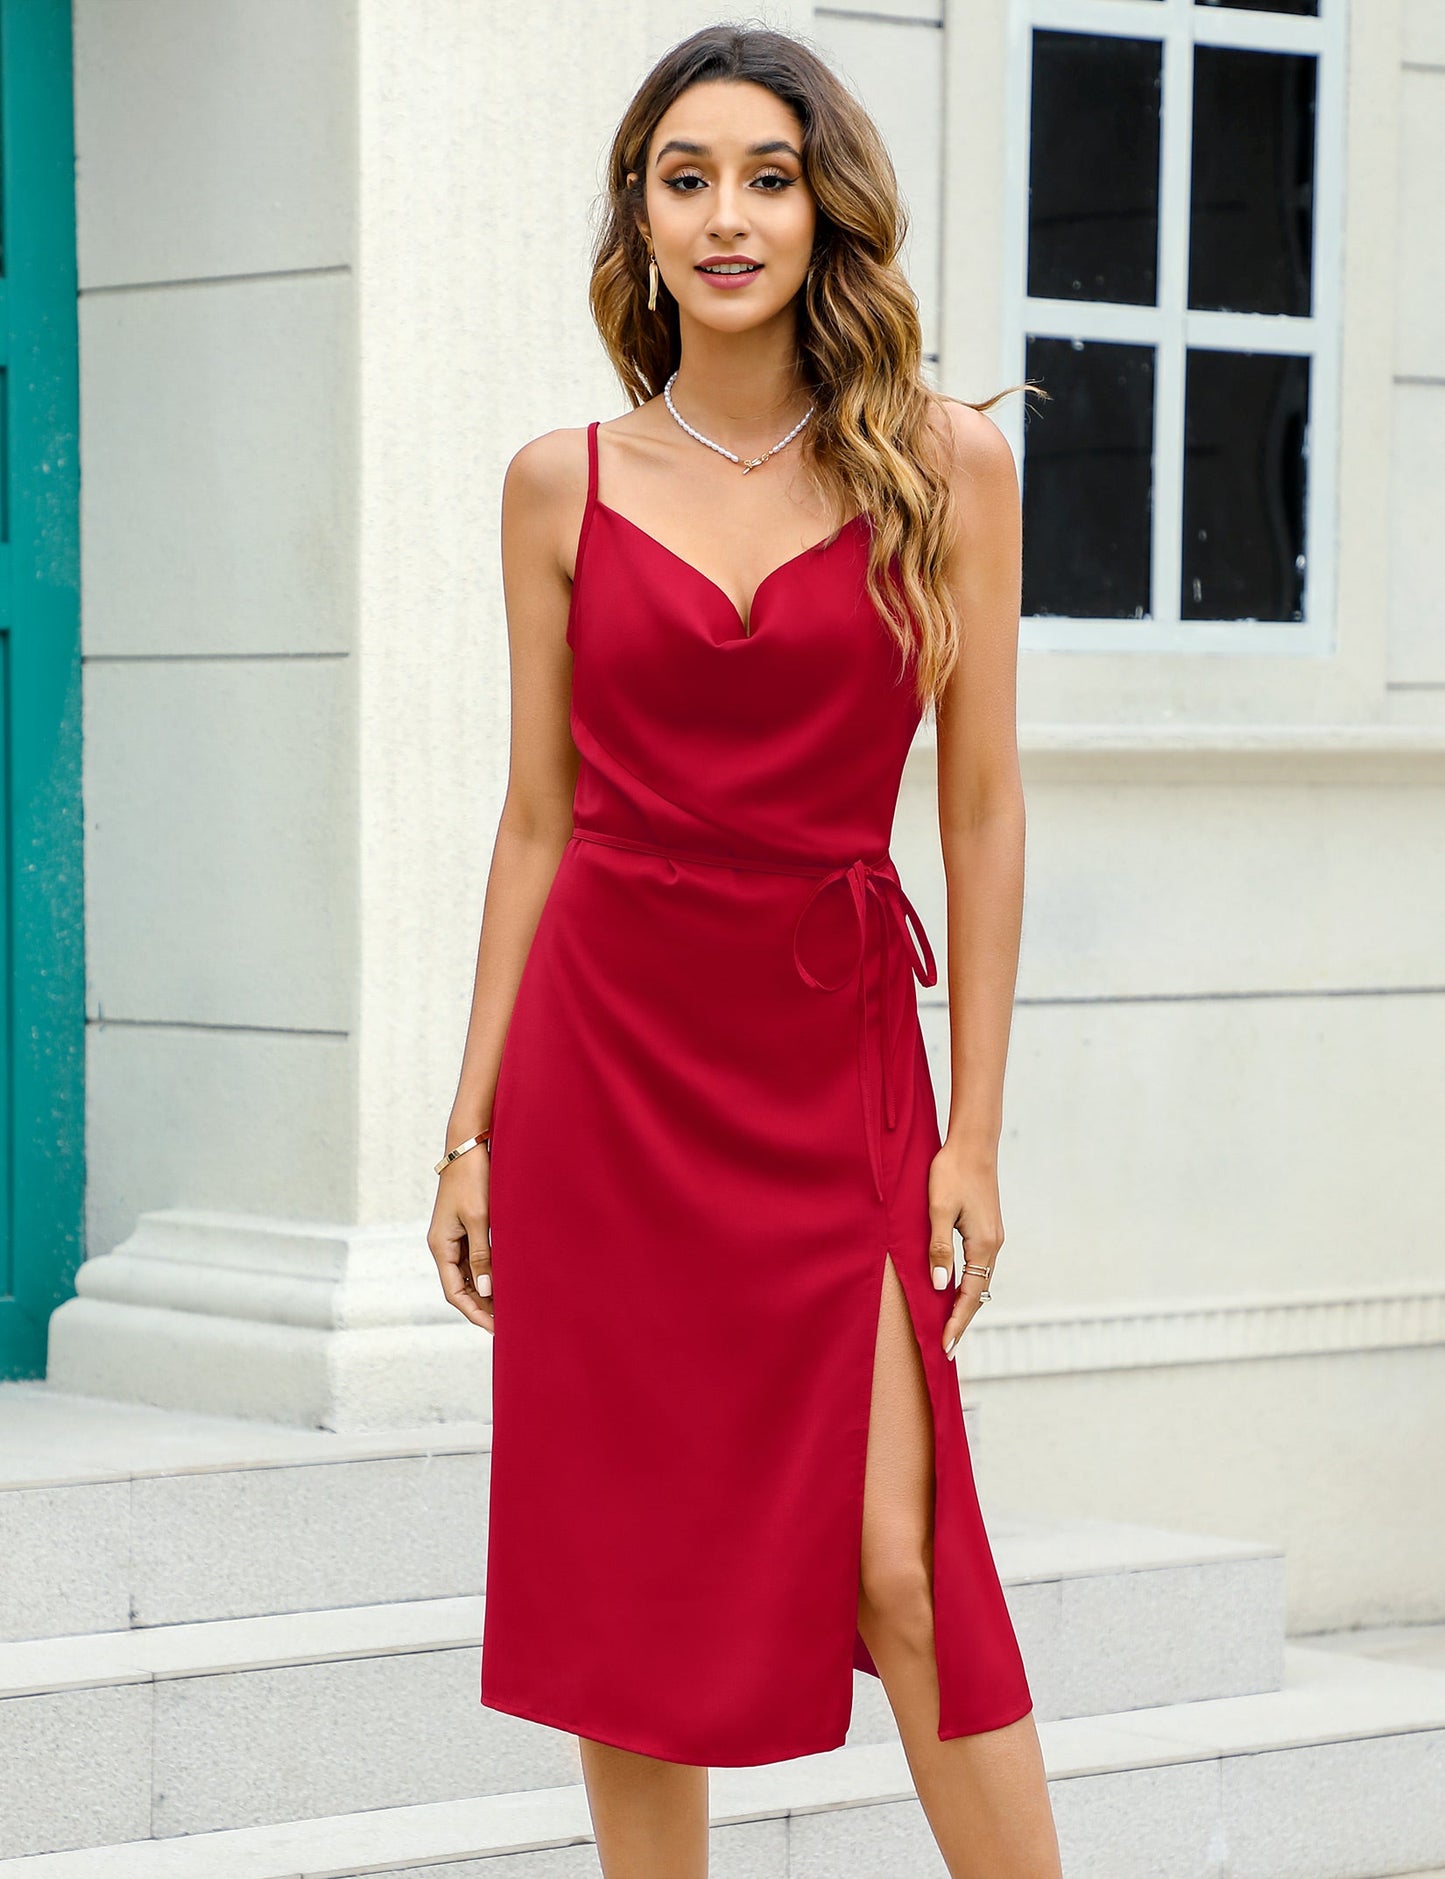 YESFASHION Women's Shiny Silk Satin Spaghetti Strap Dress Wine Red